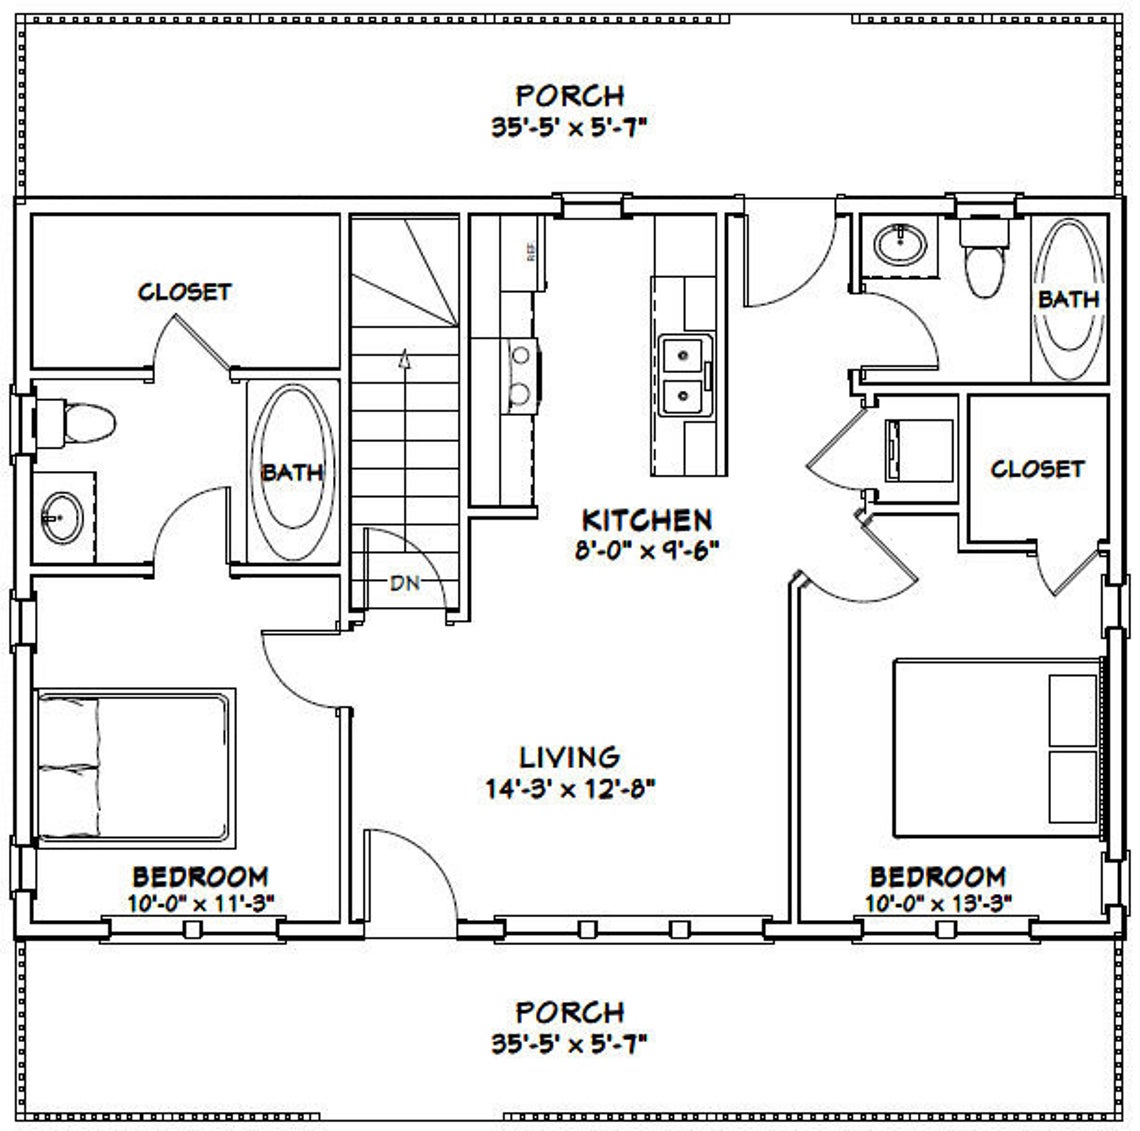 36x24-House-Plan-2-Bedrooms-2-Baths-812-sq-ft-PDF-Floor-Plan-layout-plan